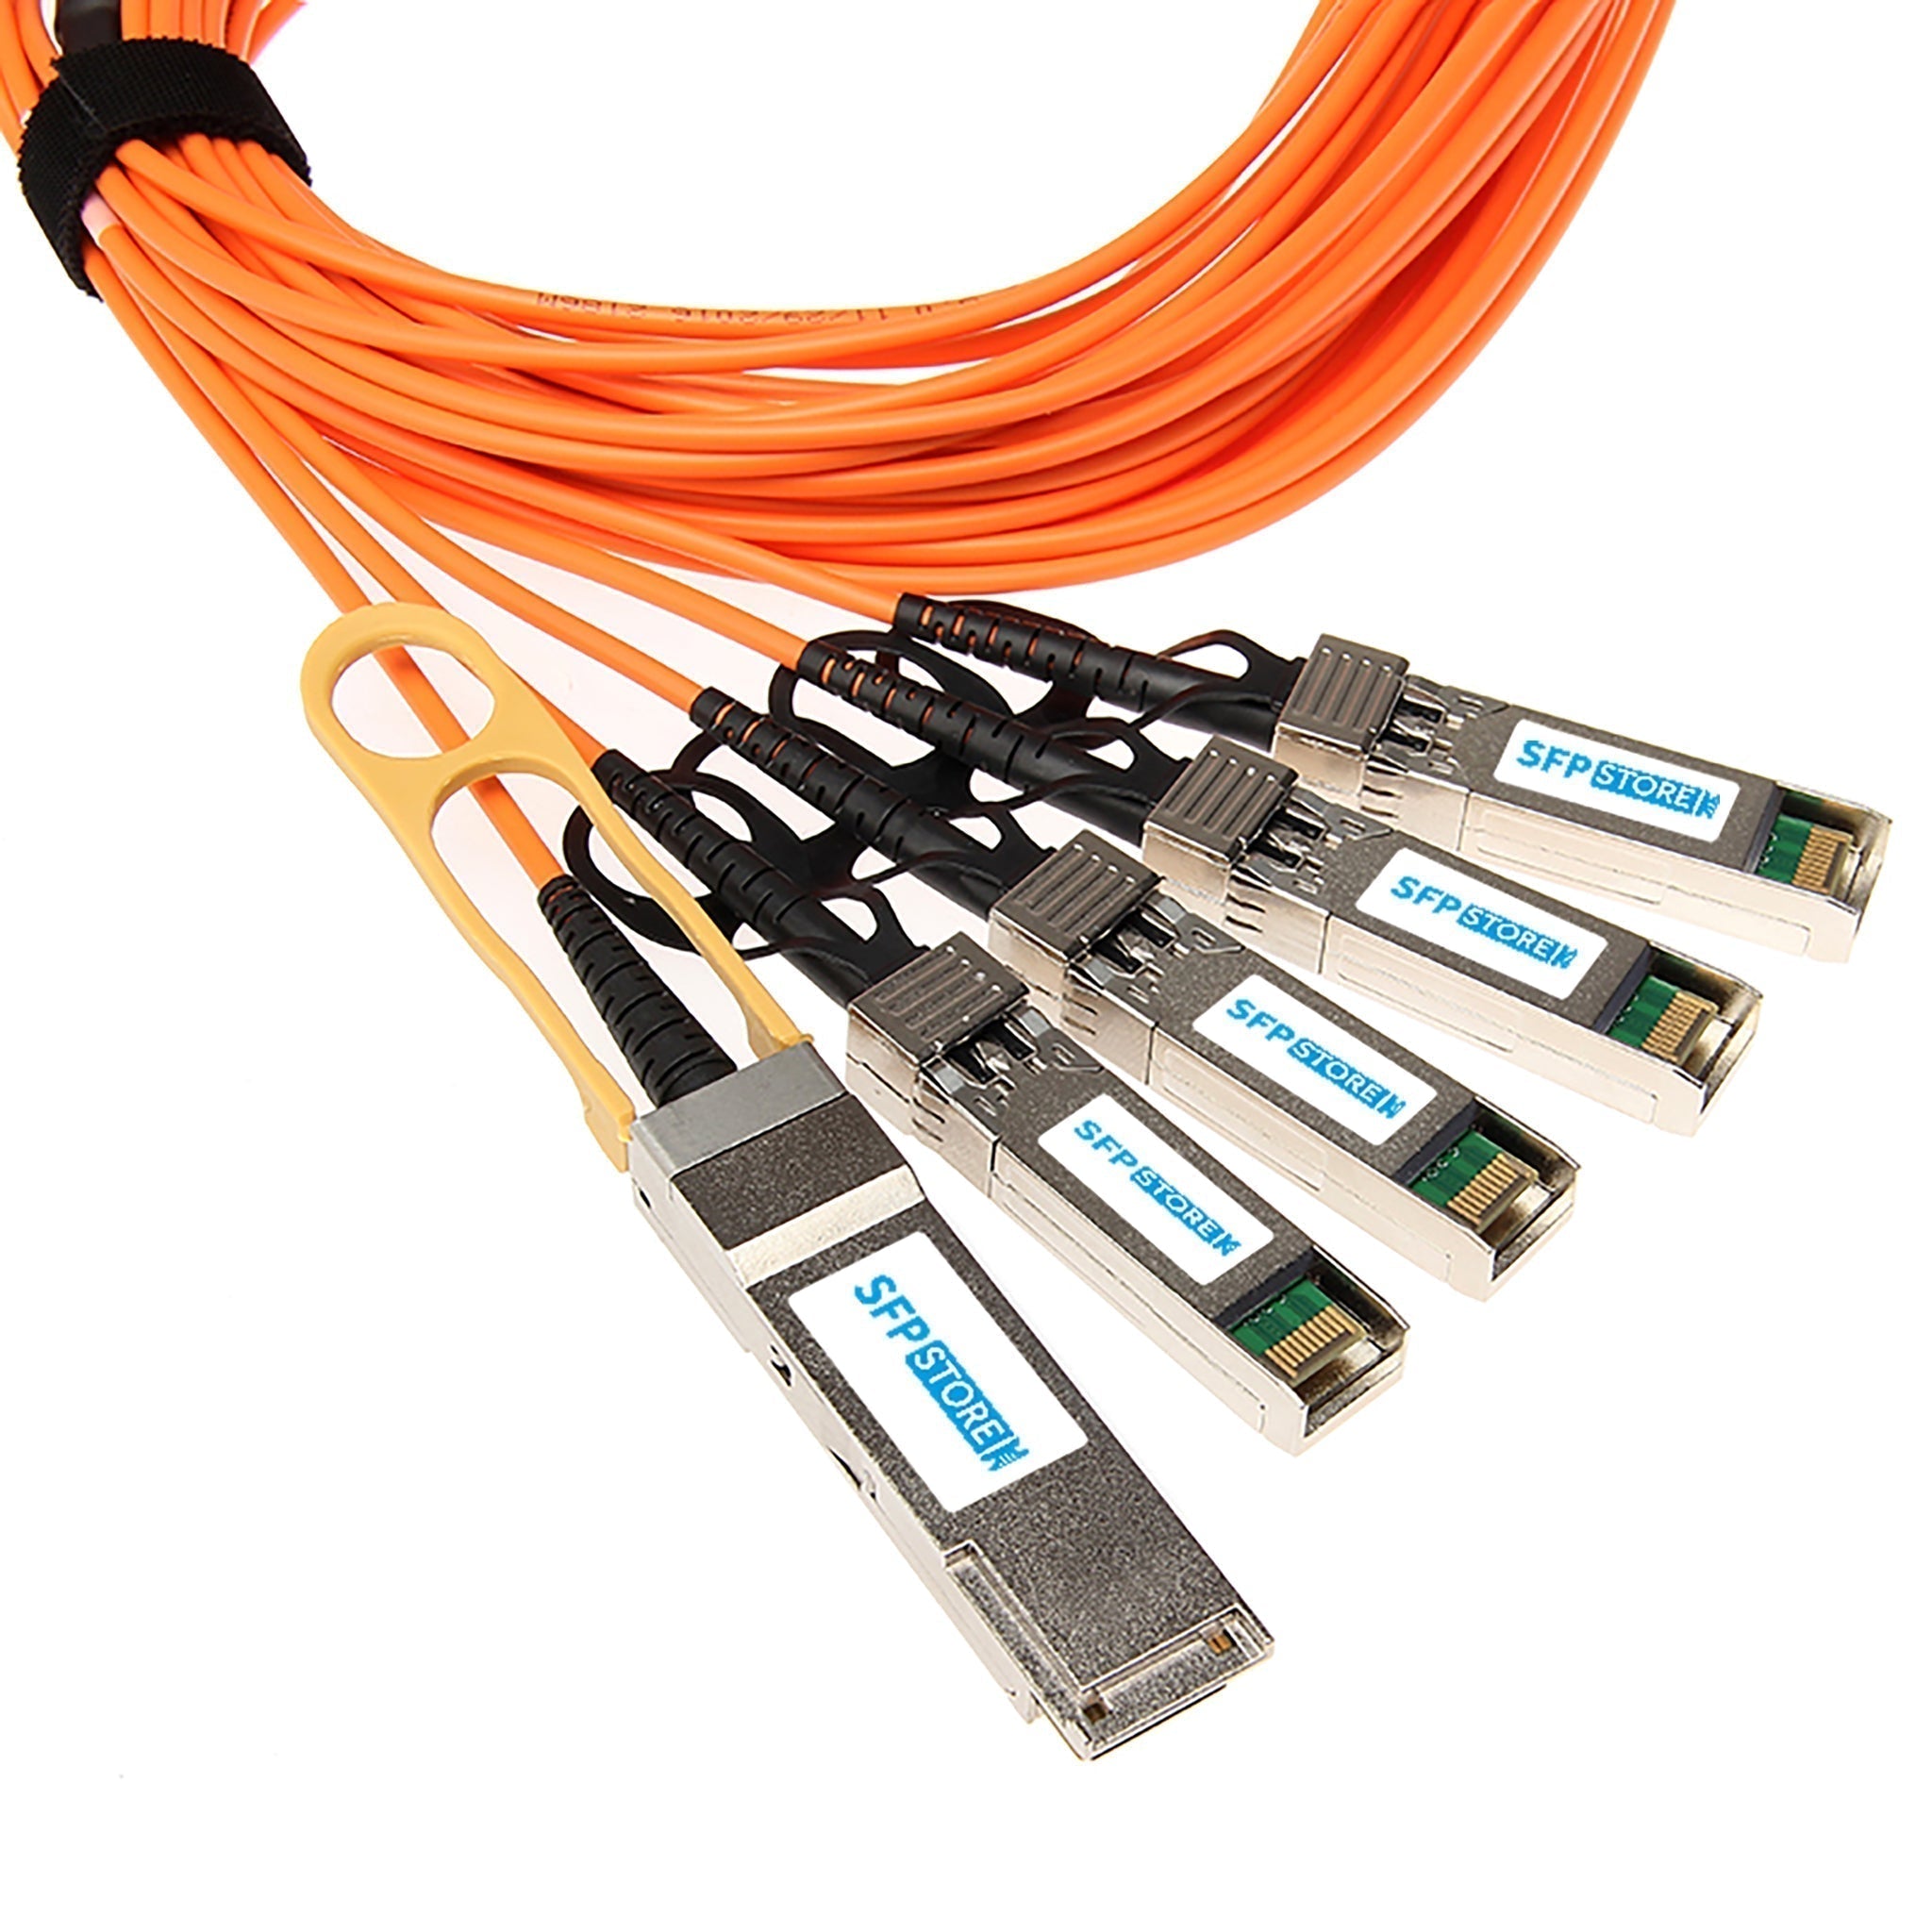 QSFP-4SFP25G-AOC3M-C - 3m Cisco Compatible 100G QSFP28 to 4 x 25G SFP28 Active Optical Cable